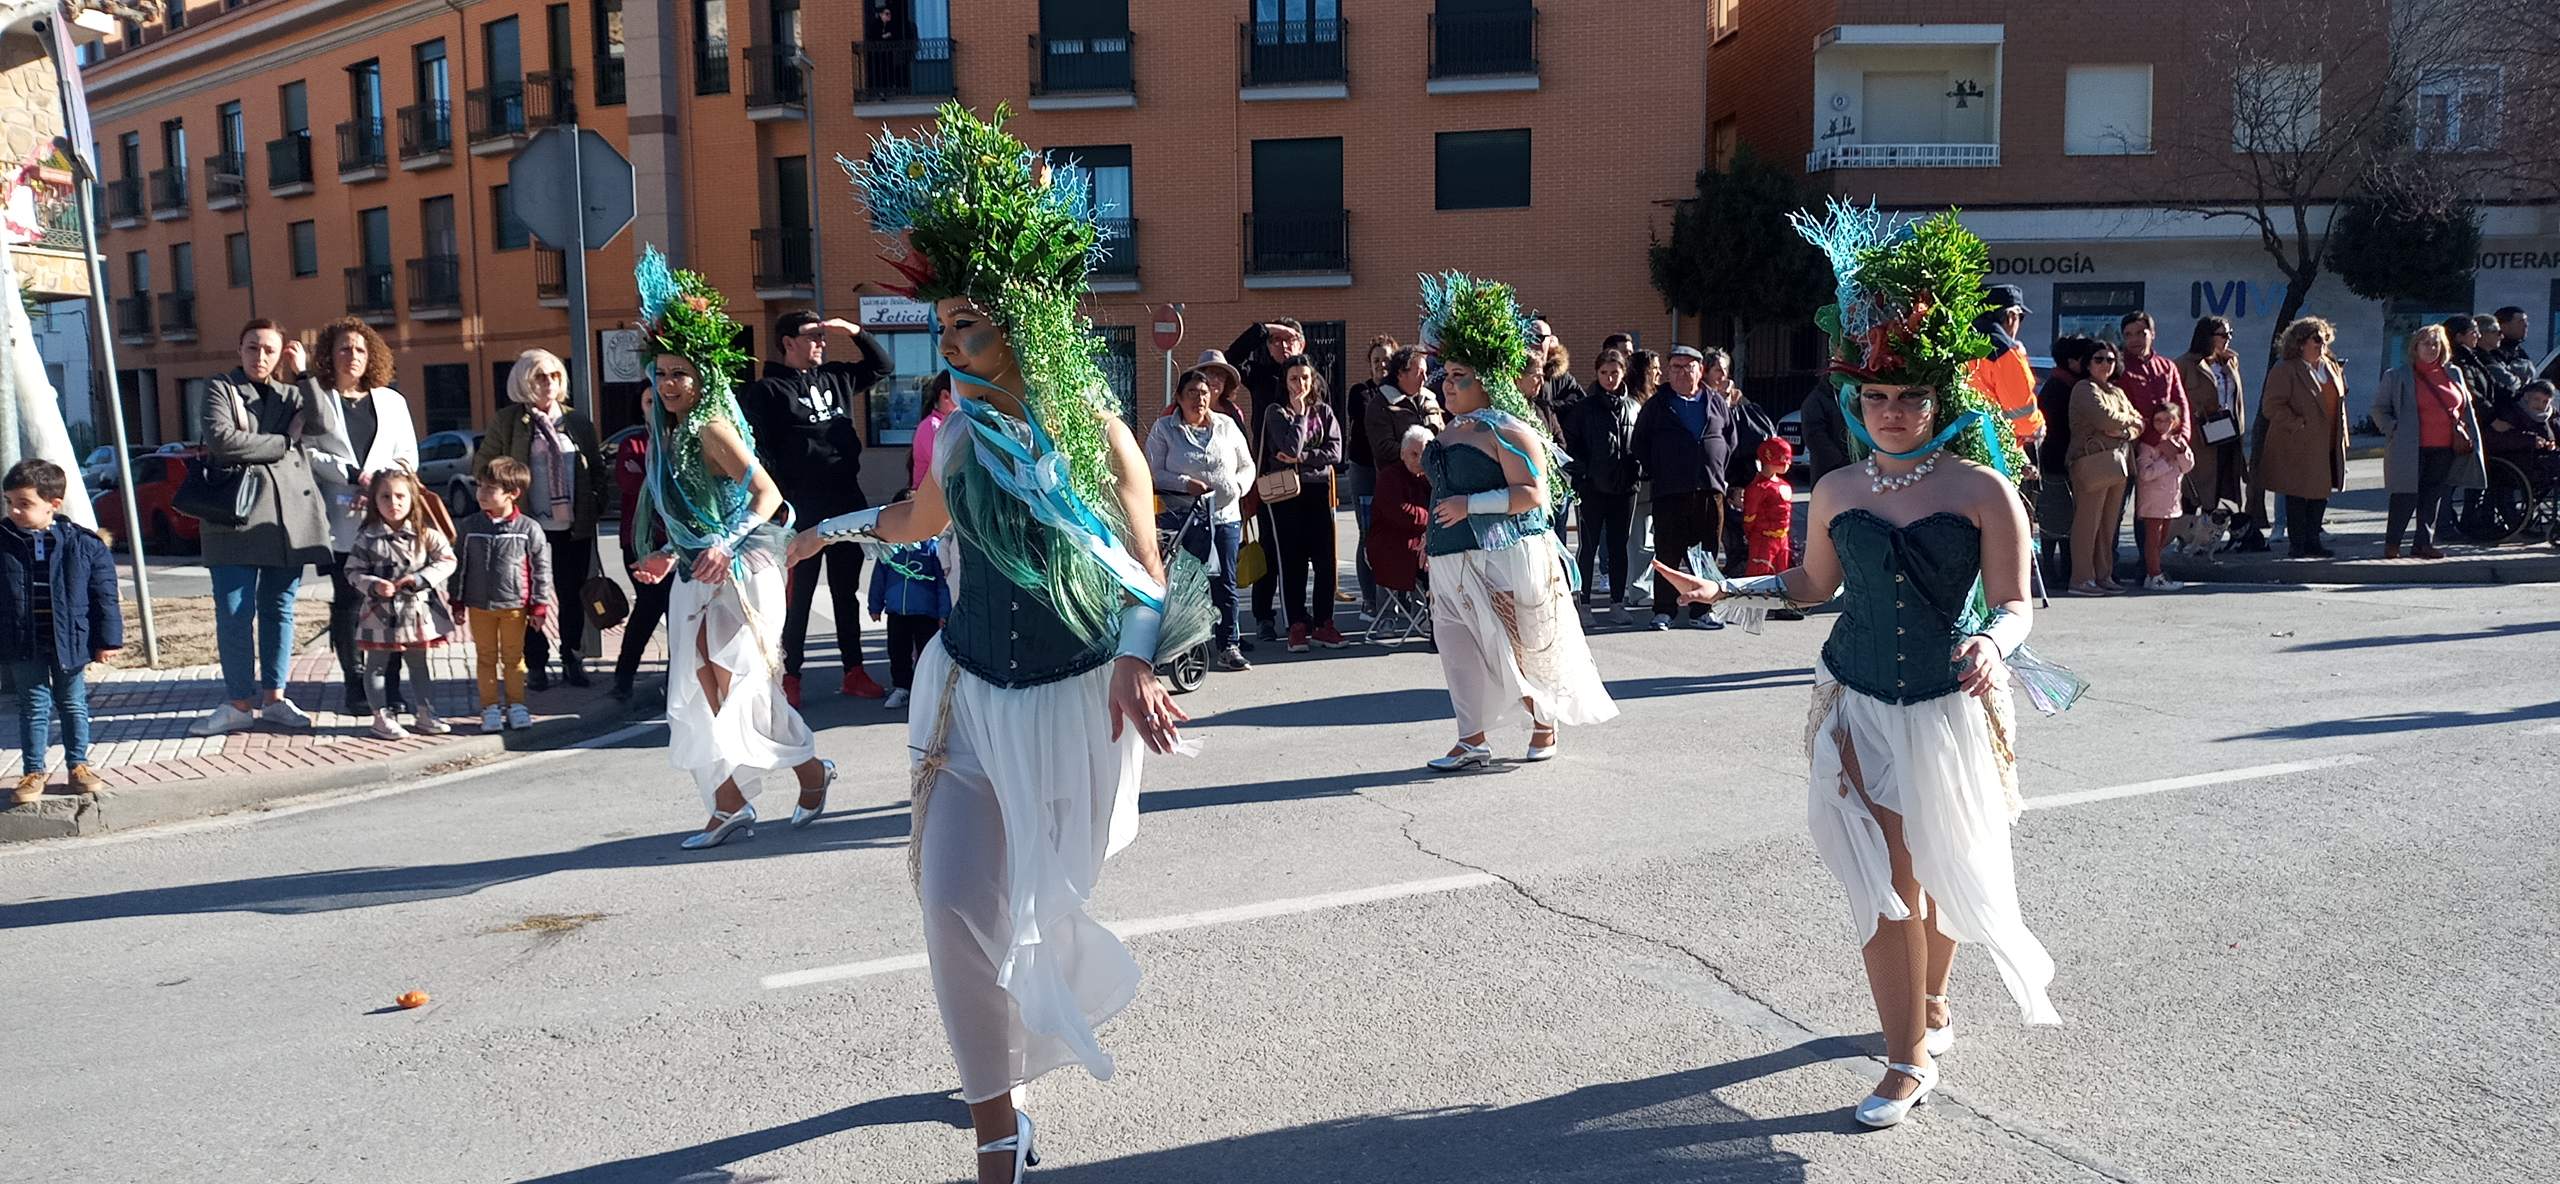 Carnaval en Villacañas